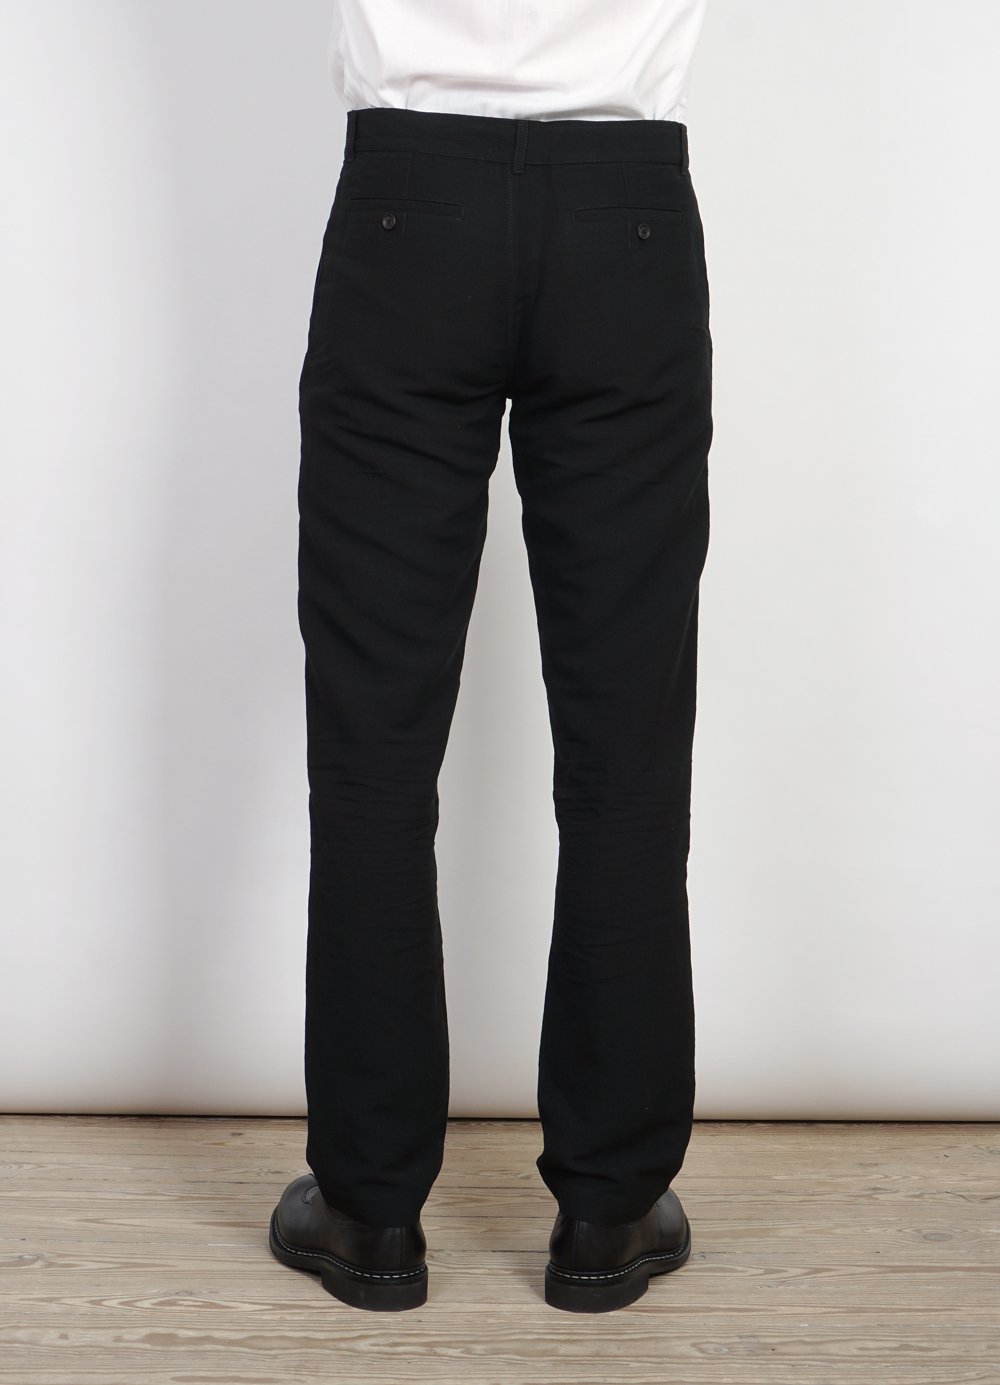 FRED | Regular Fit Trousers | Black -HANSEN Garments- HANSEN Garments